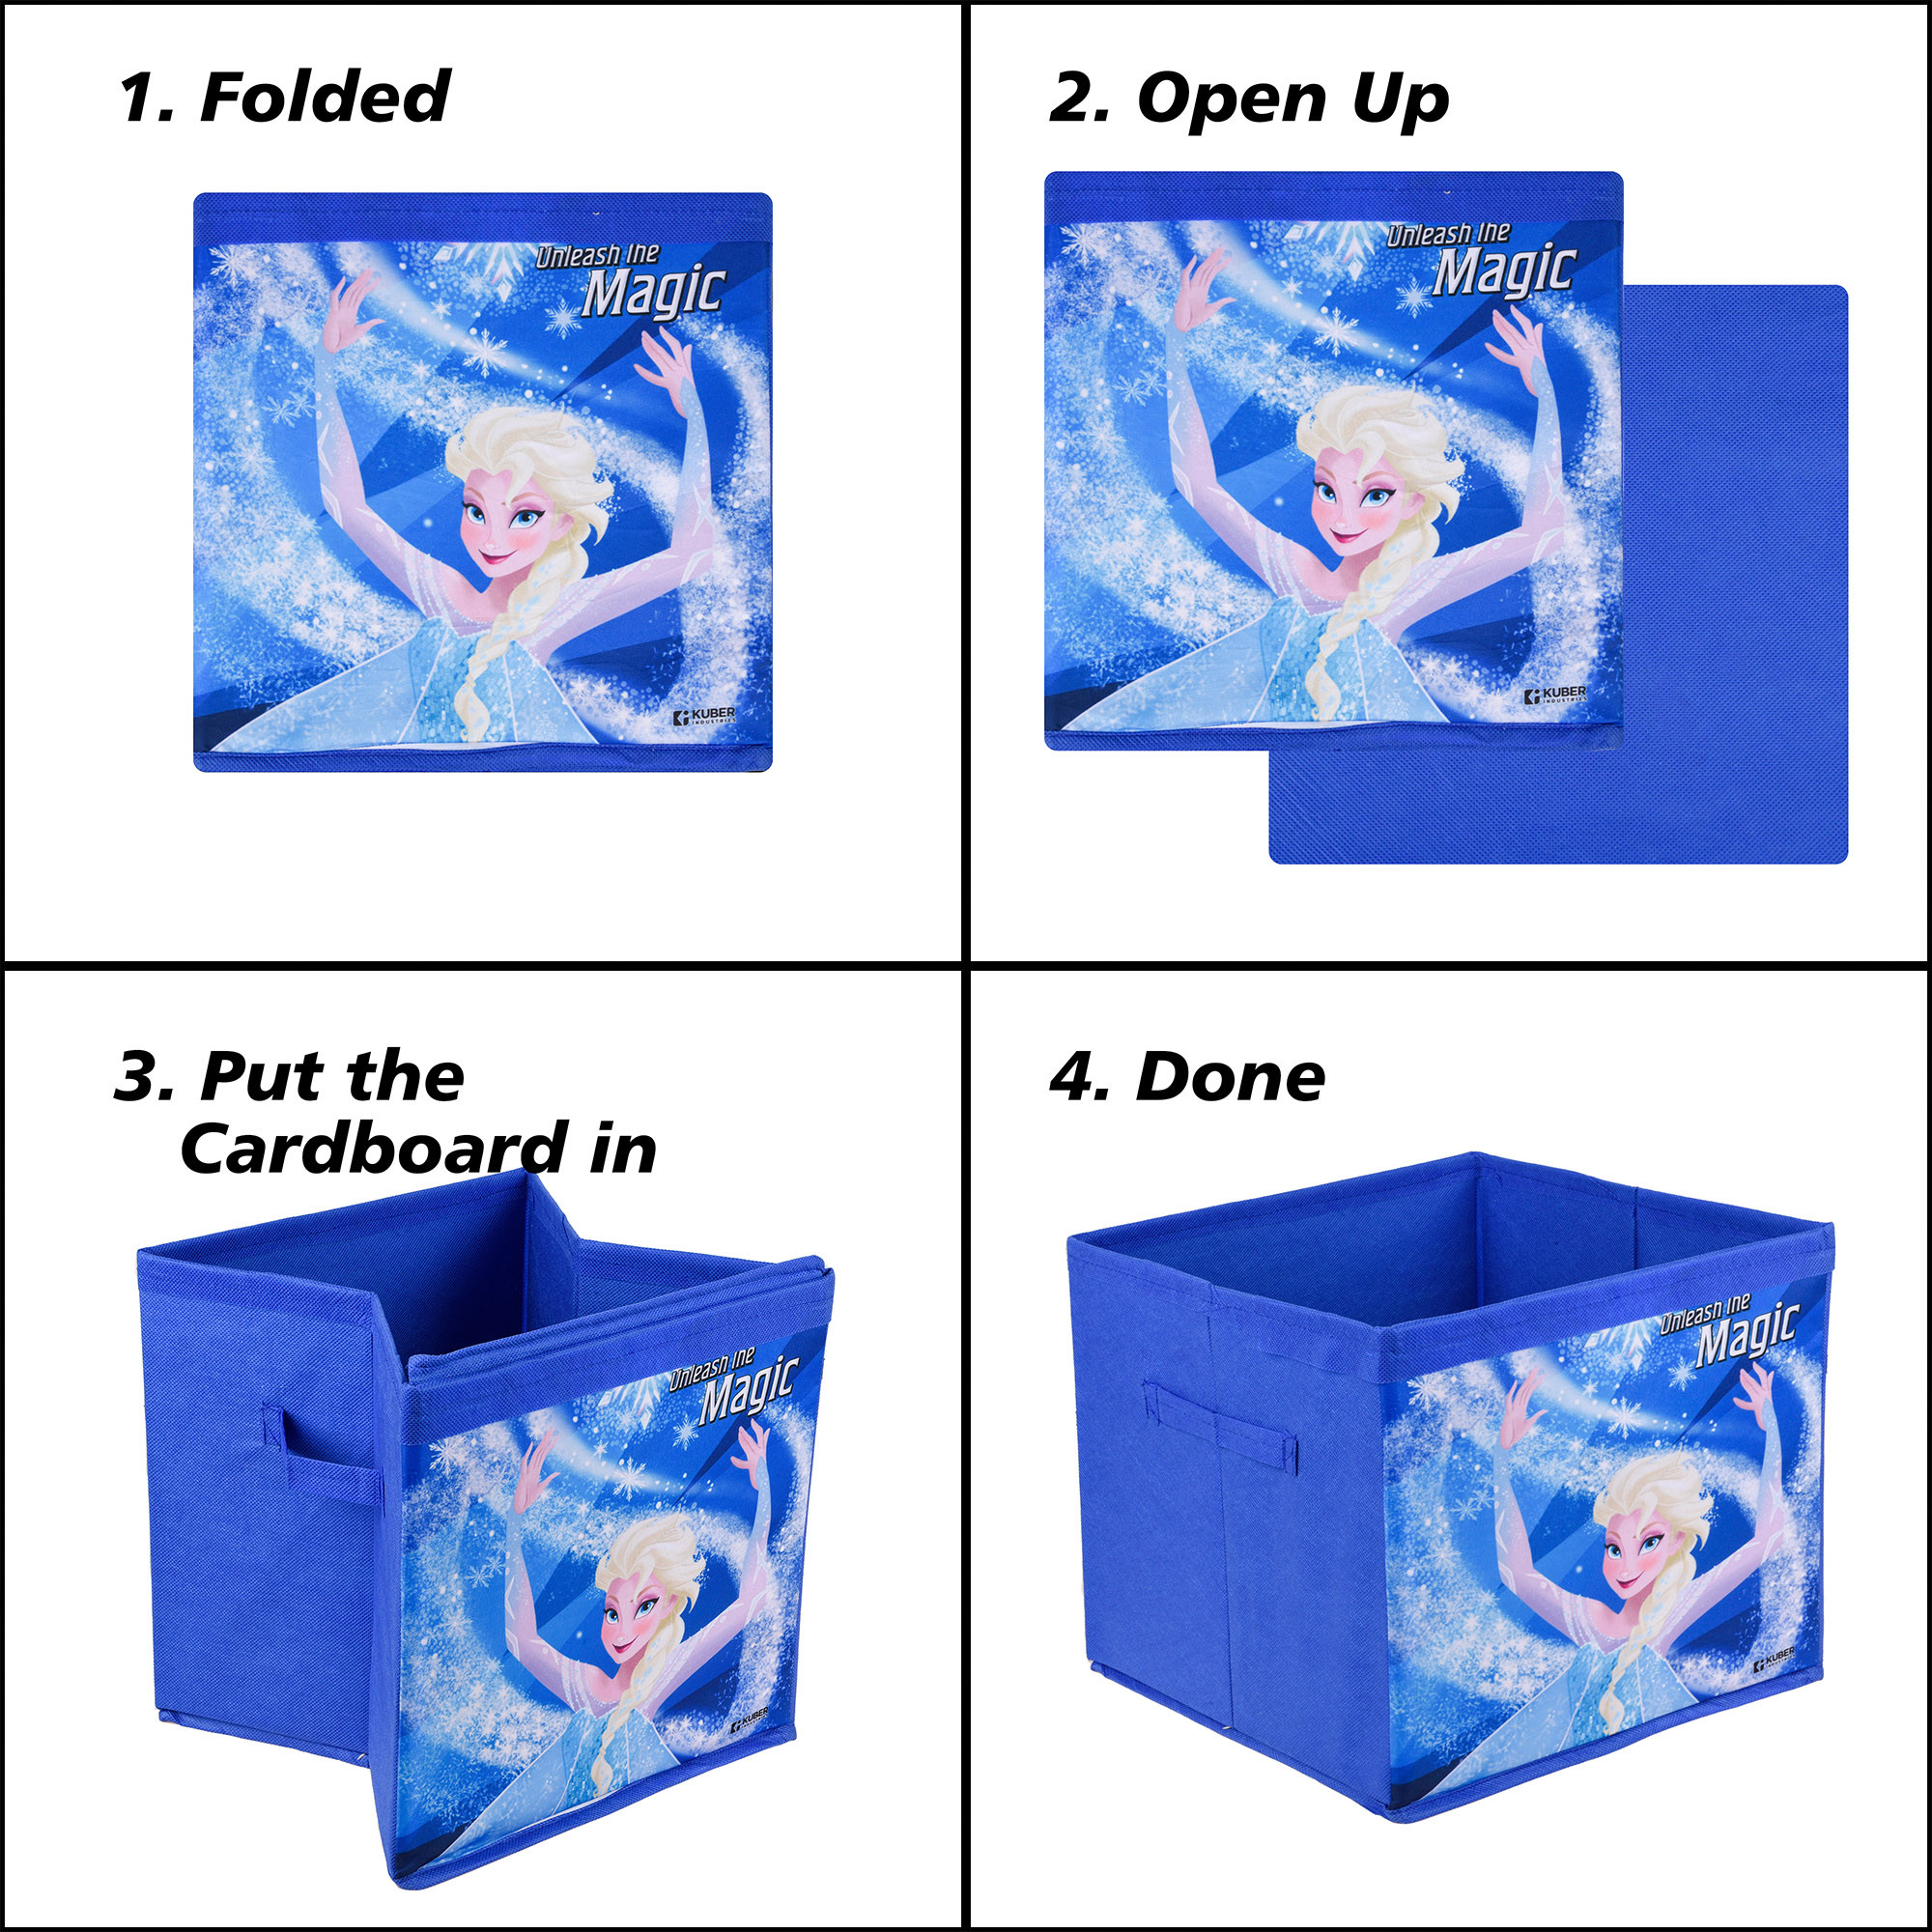 Kuber Industries Storage Box | Square Toy Storage Box | Wardrobe Organizer for Clothes-Books-Toys | Stationary Organizer | Drawer Organizer Box with Handle | Disney-Print | Black & Blue